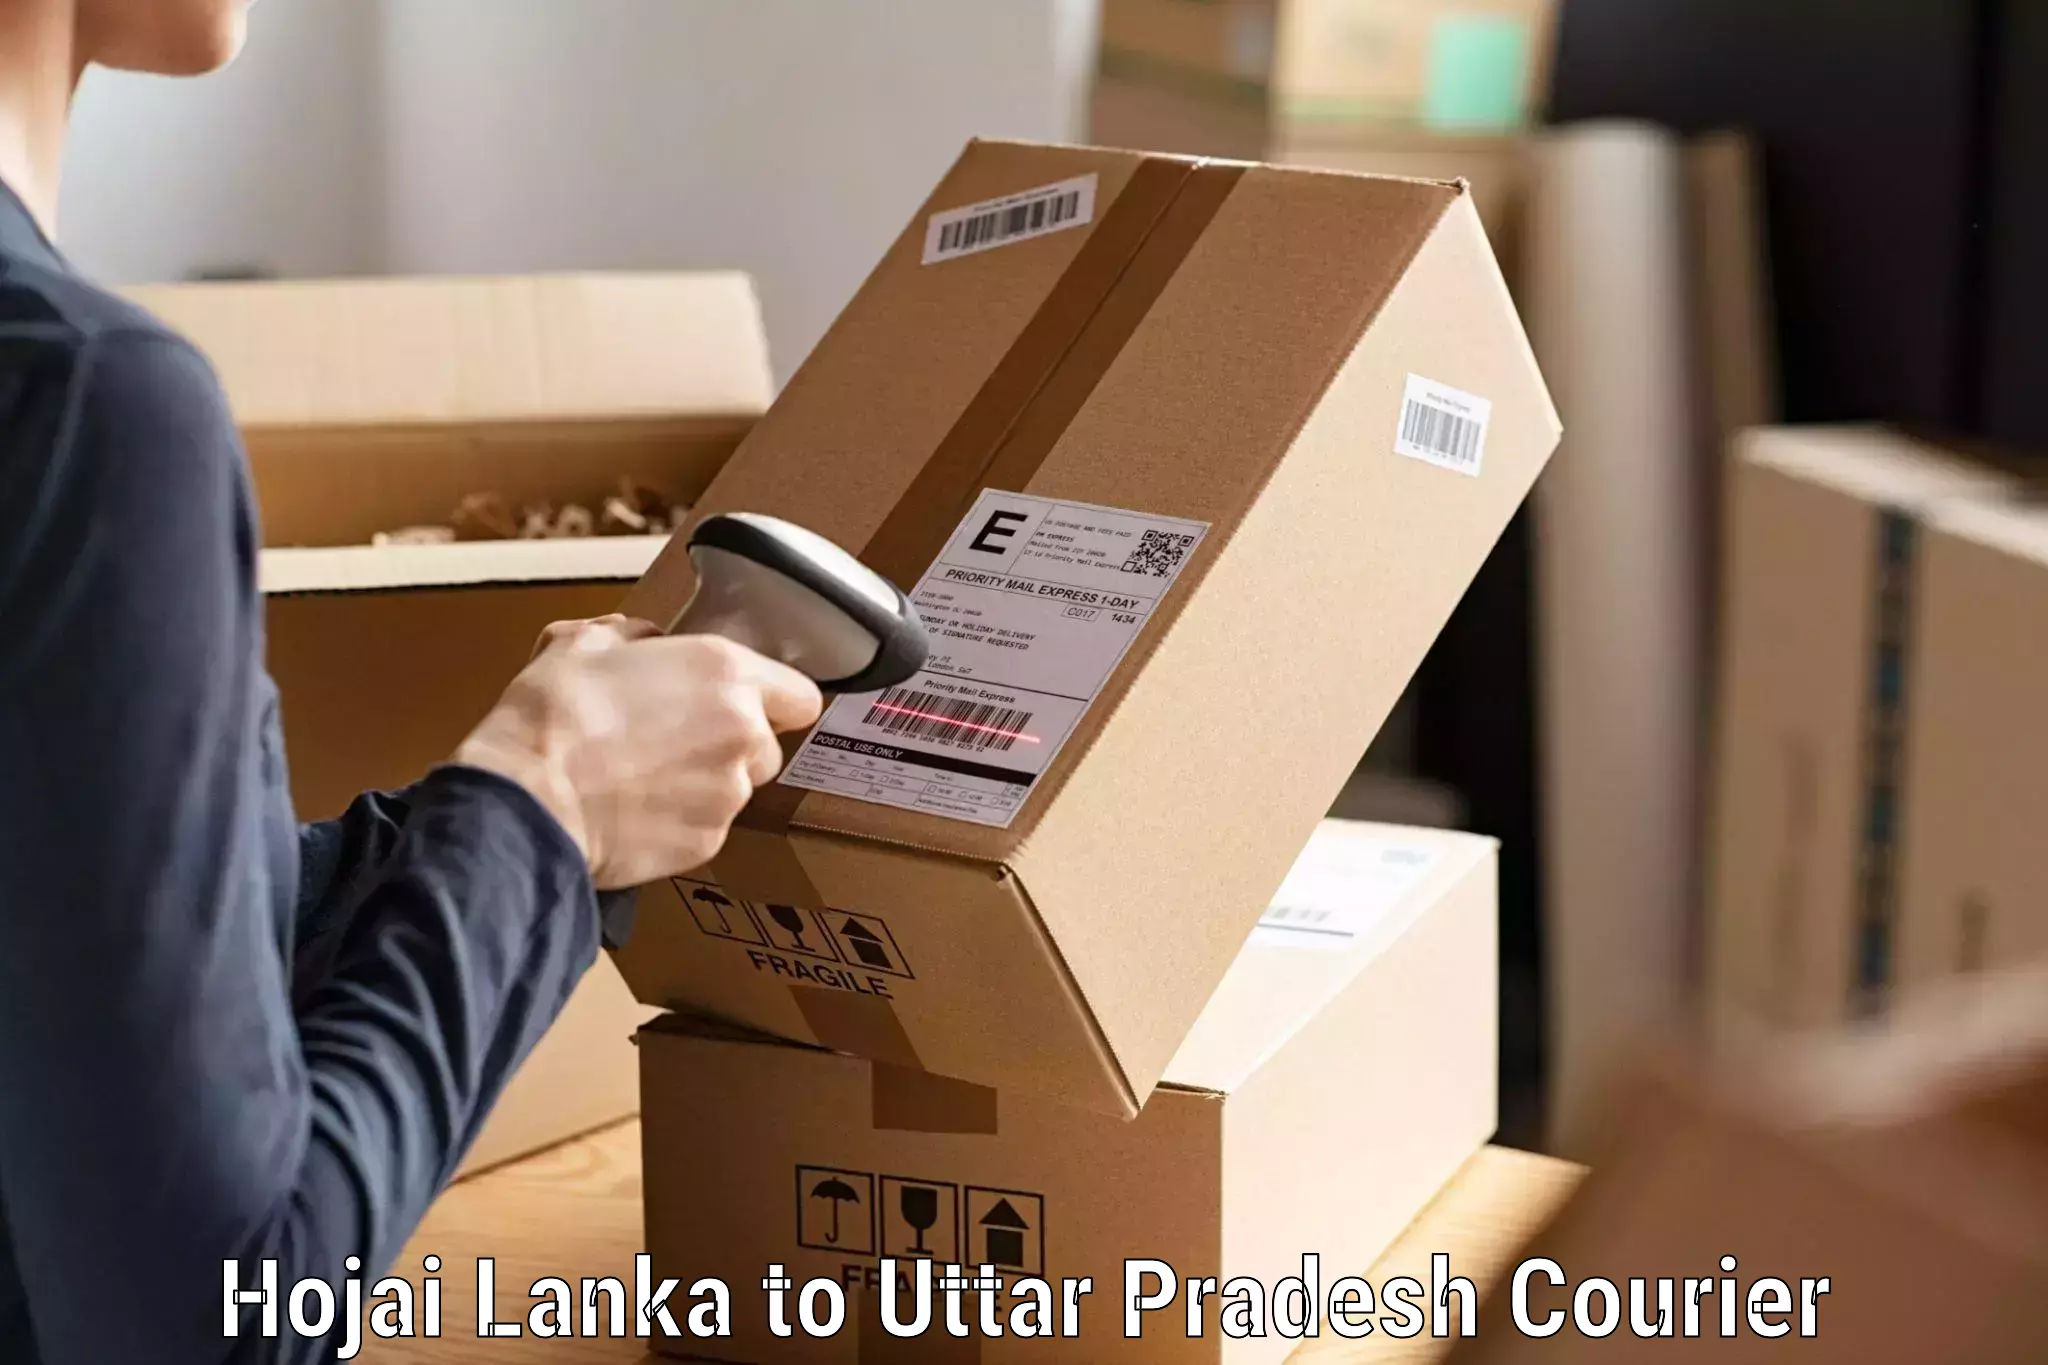 Customized delivery options in Hojai Lanka to Muskara